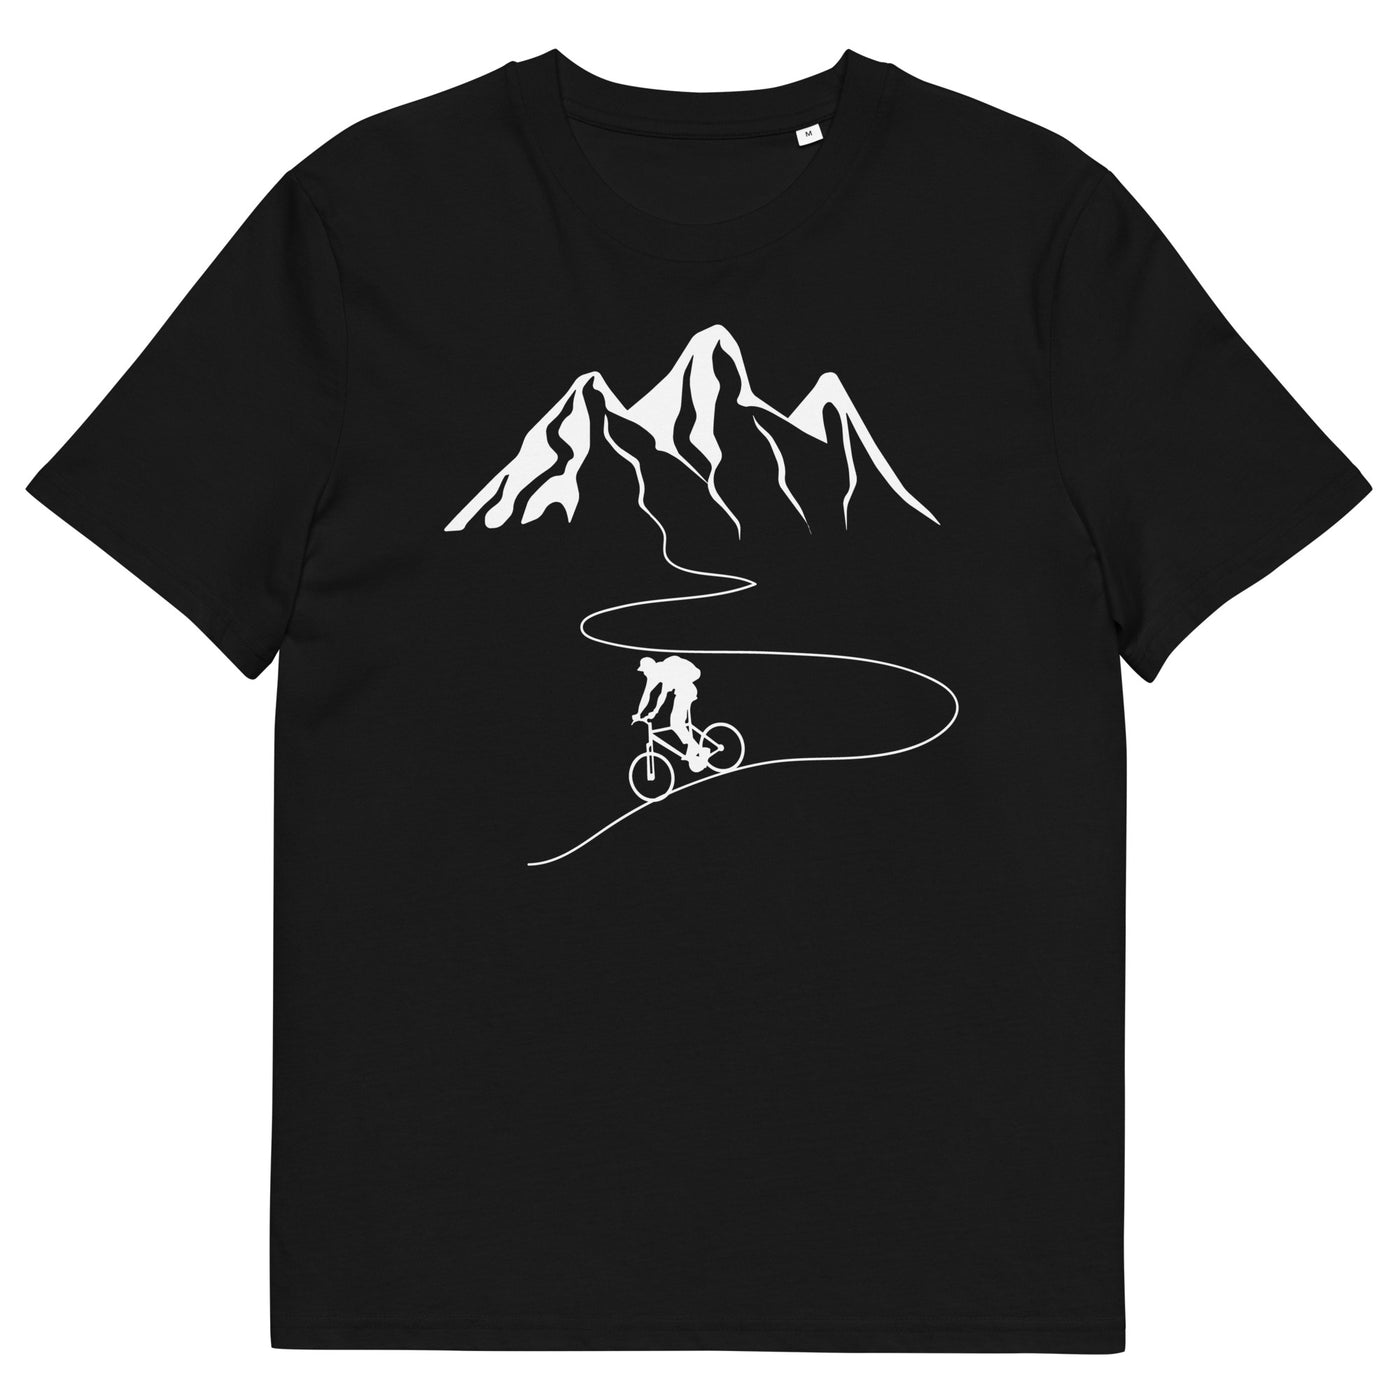 Berge - Kurve Linie - Radfahren - Herren Premium Organic T-Shirt fahrrad xxx yyy zzz Black